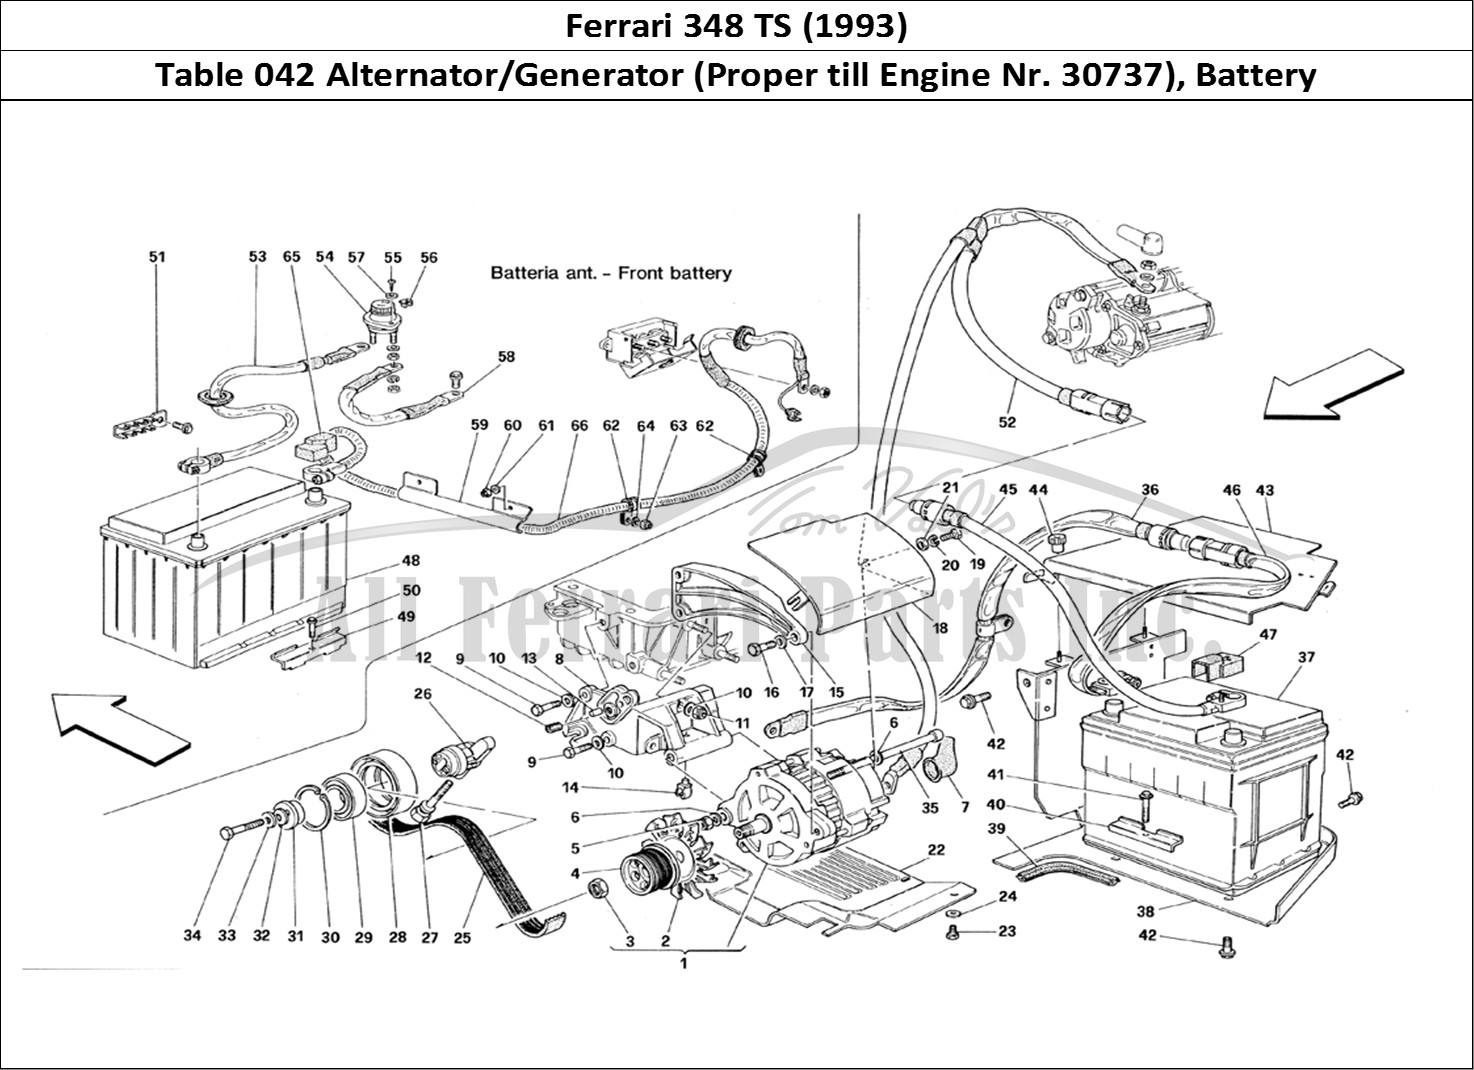 Ferrari Parts Ferrari 348 TB (1993) Page 042 Current Generator (Valid